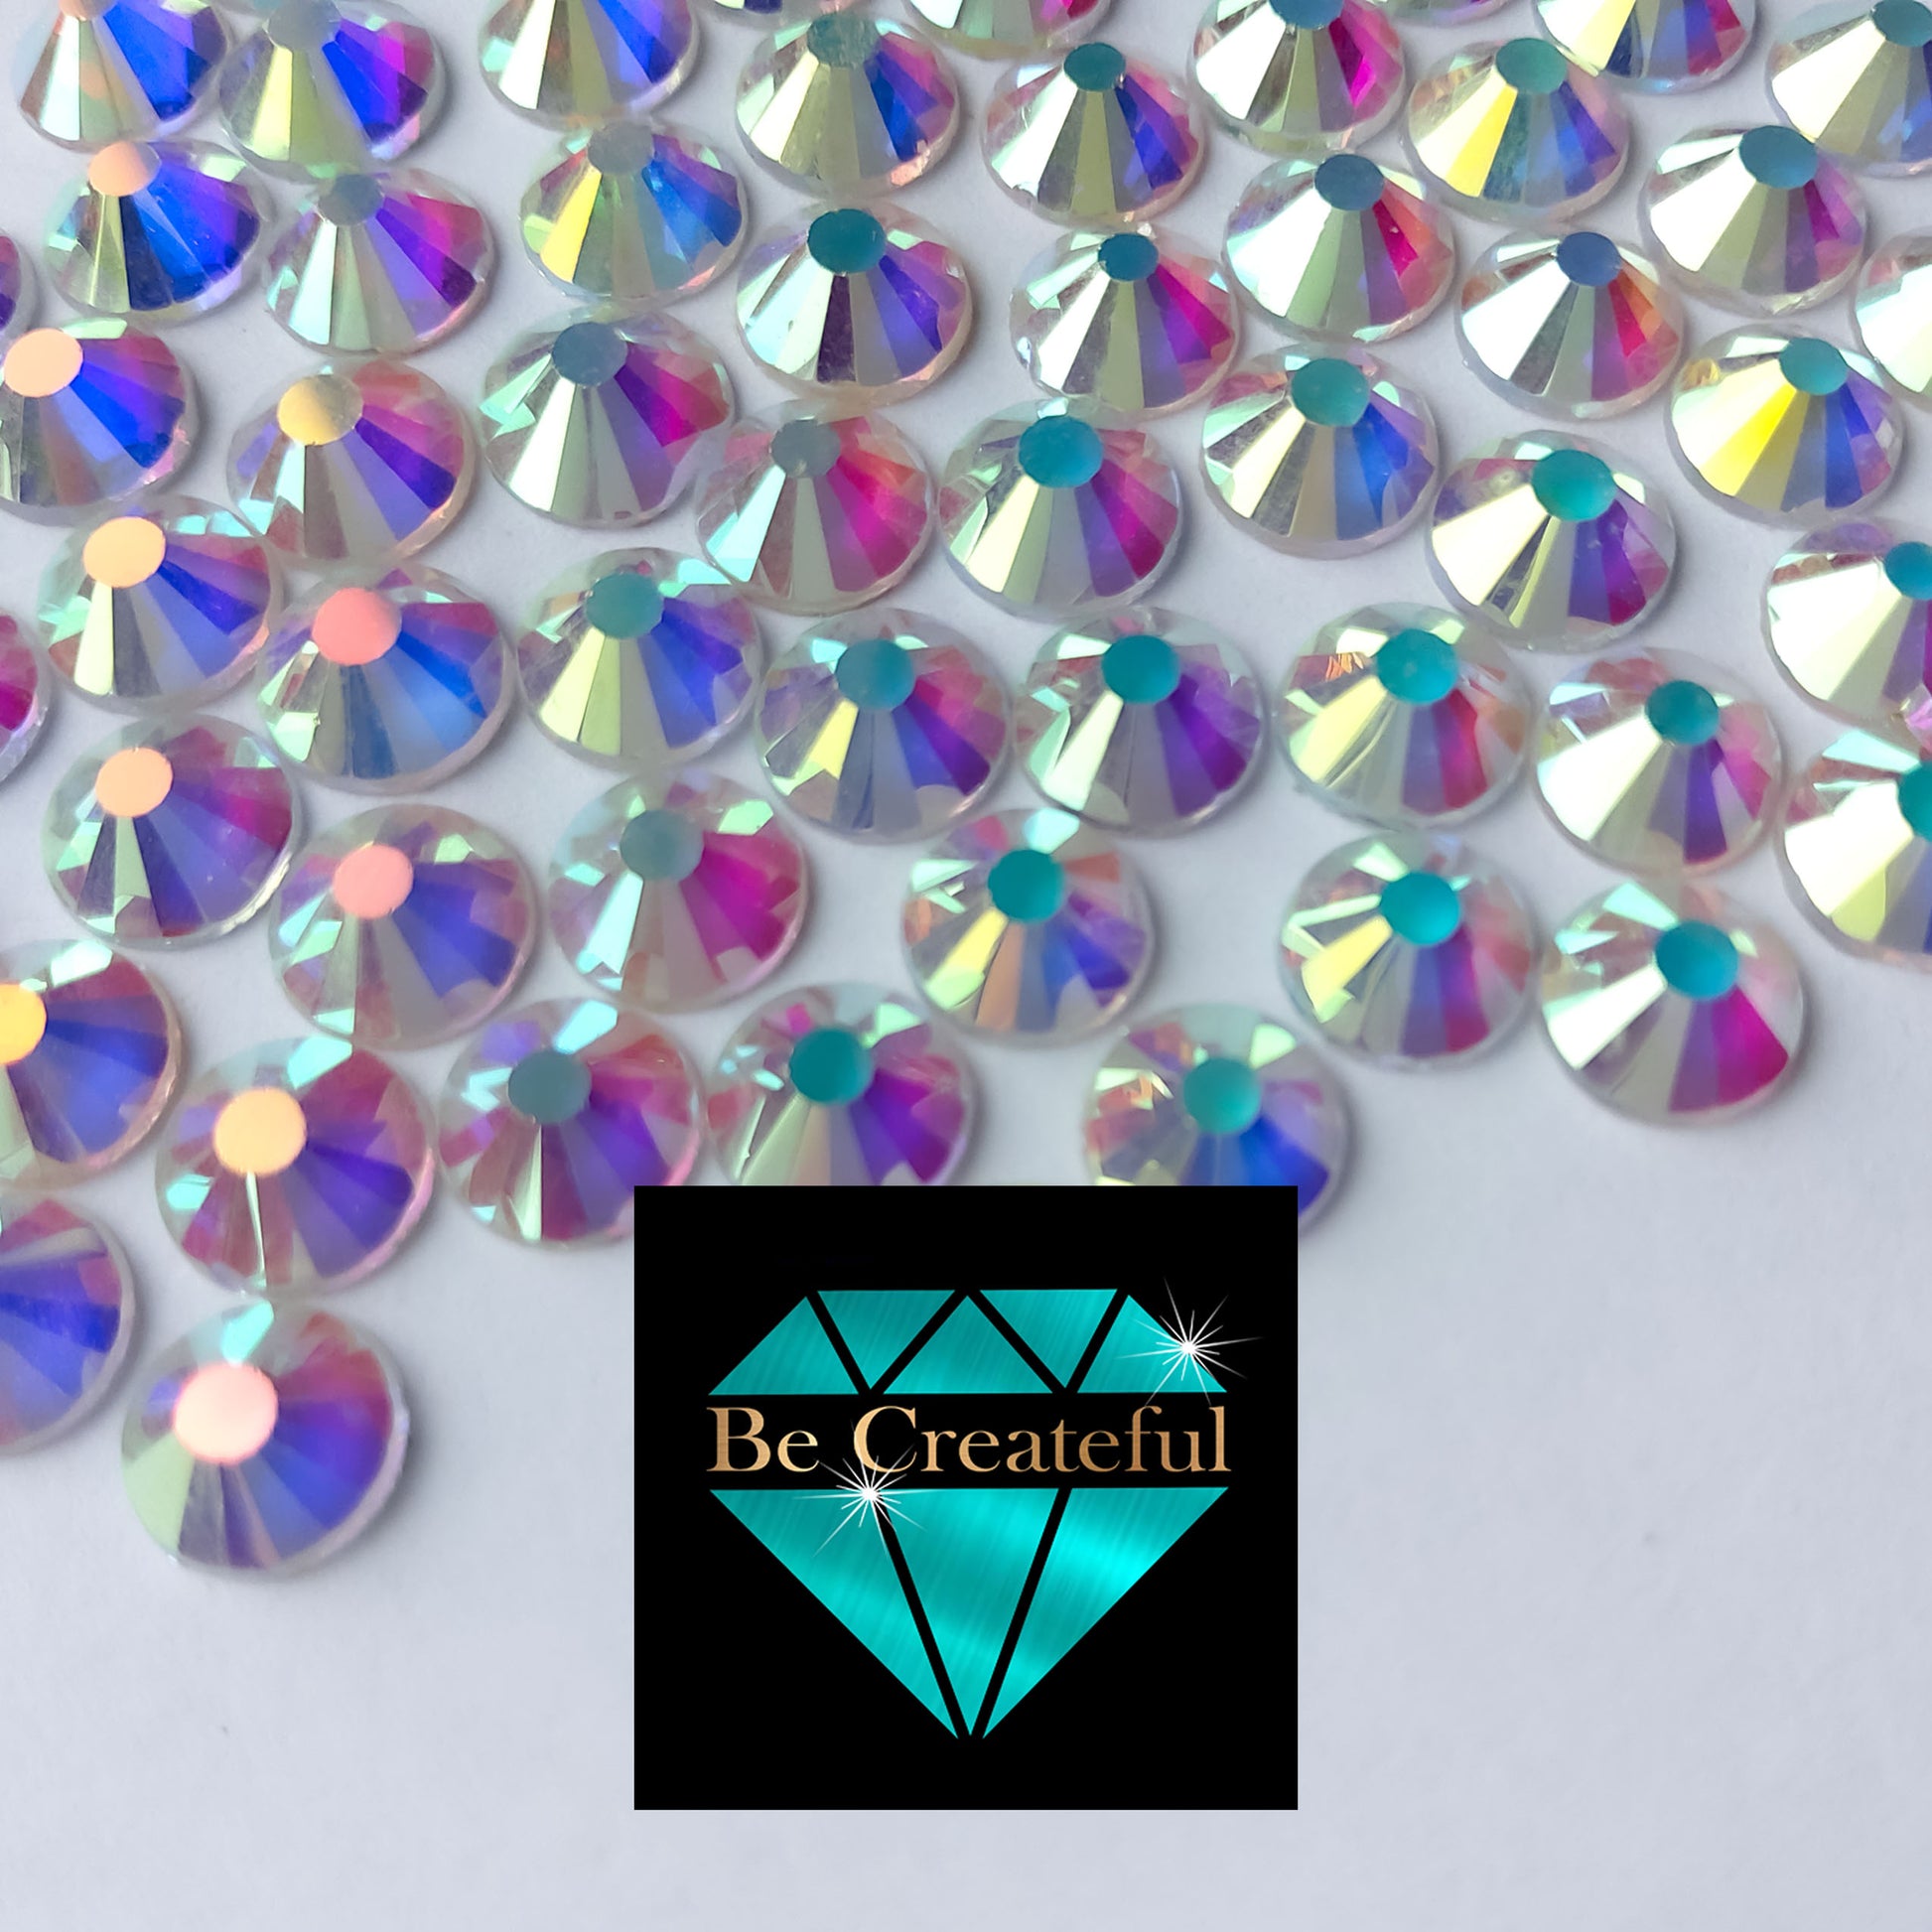 Loose Diamonds Whole 25mm Resin Rhinestones Transparent Bottom Flatback  Crystal AB Nail Gems Rhinestone For Clothing Decorati2896182 From Ecbs,  $20.11